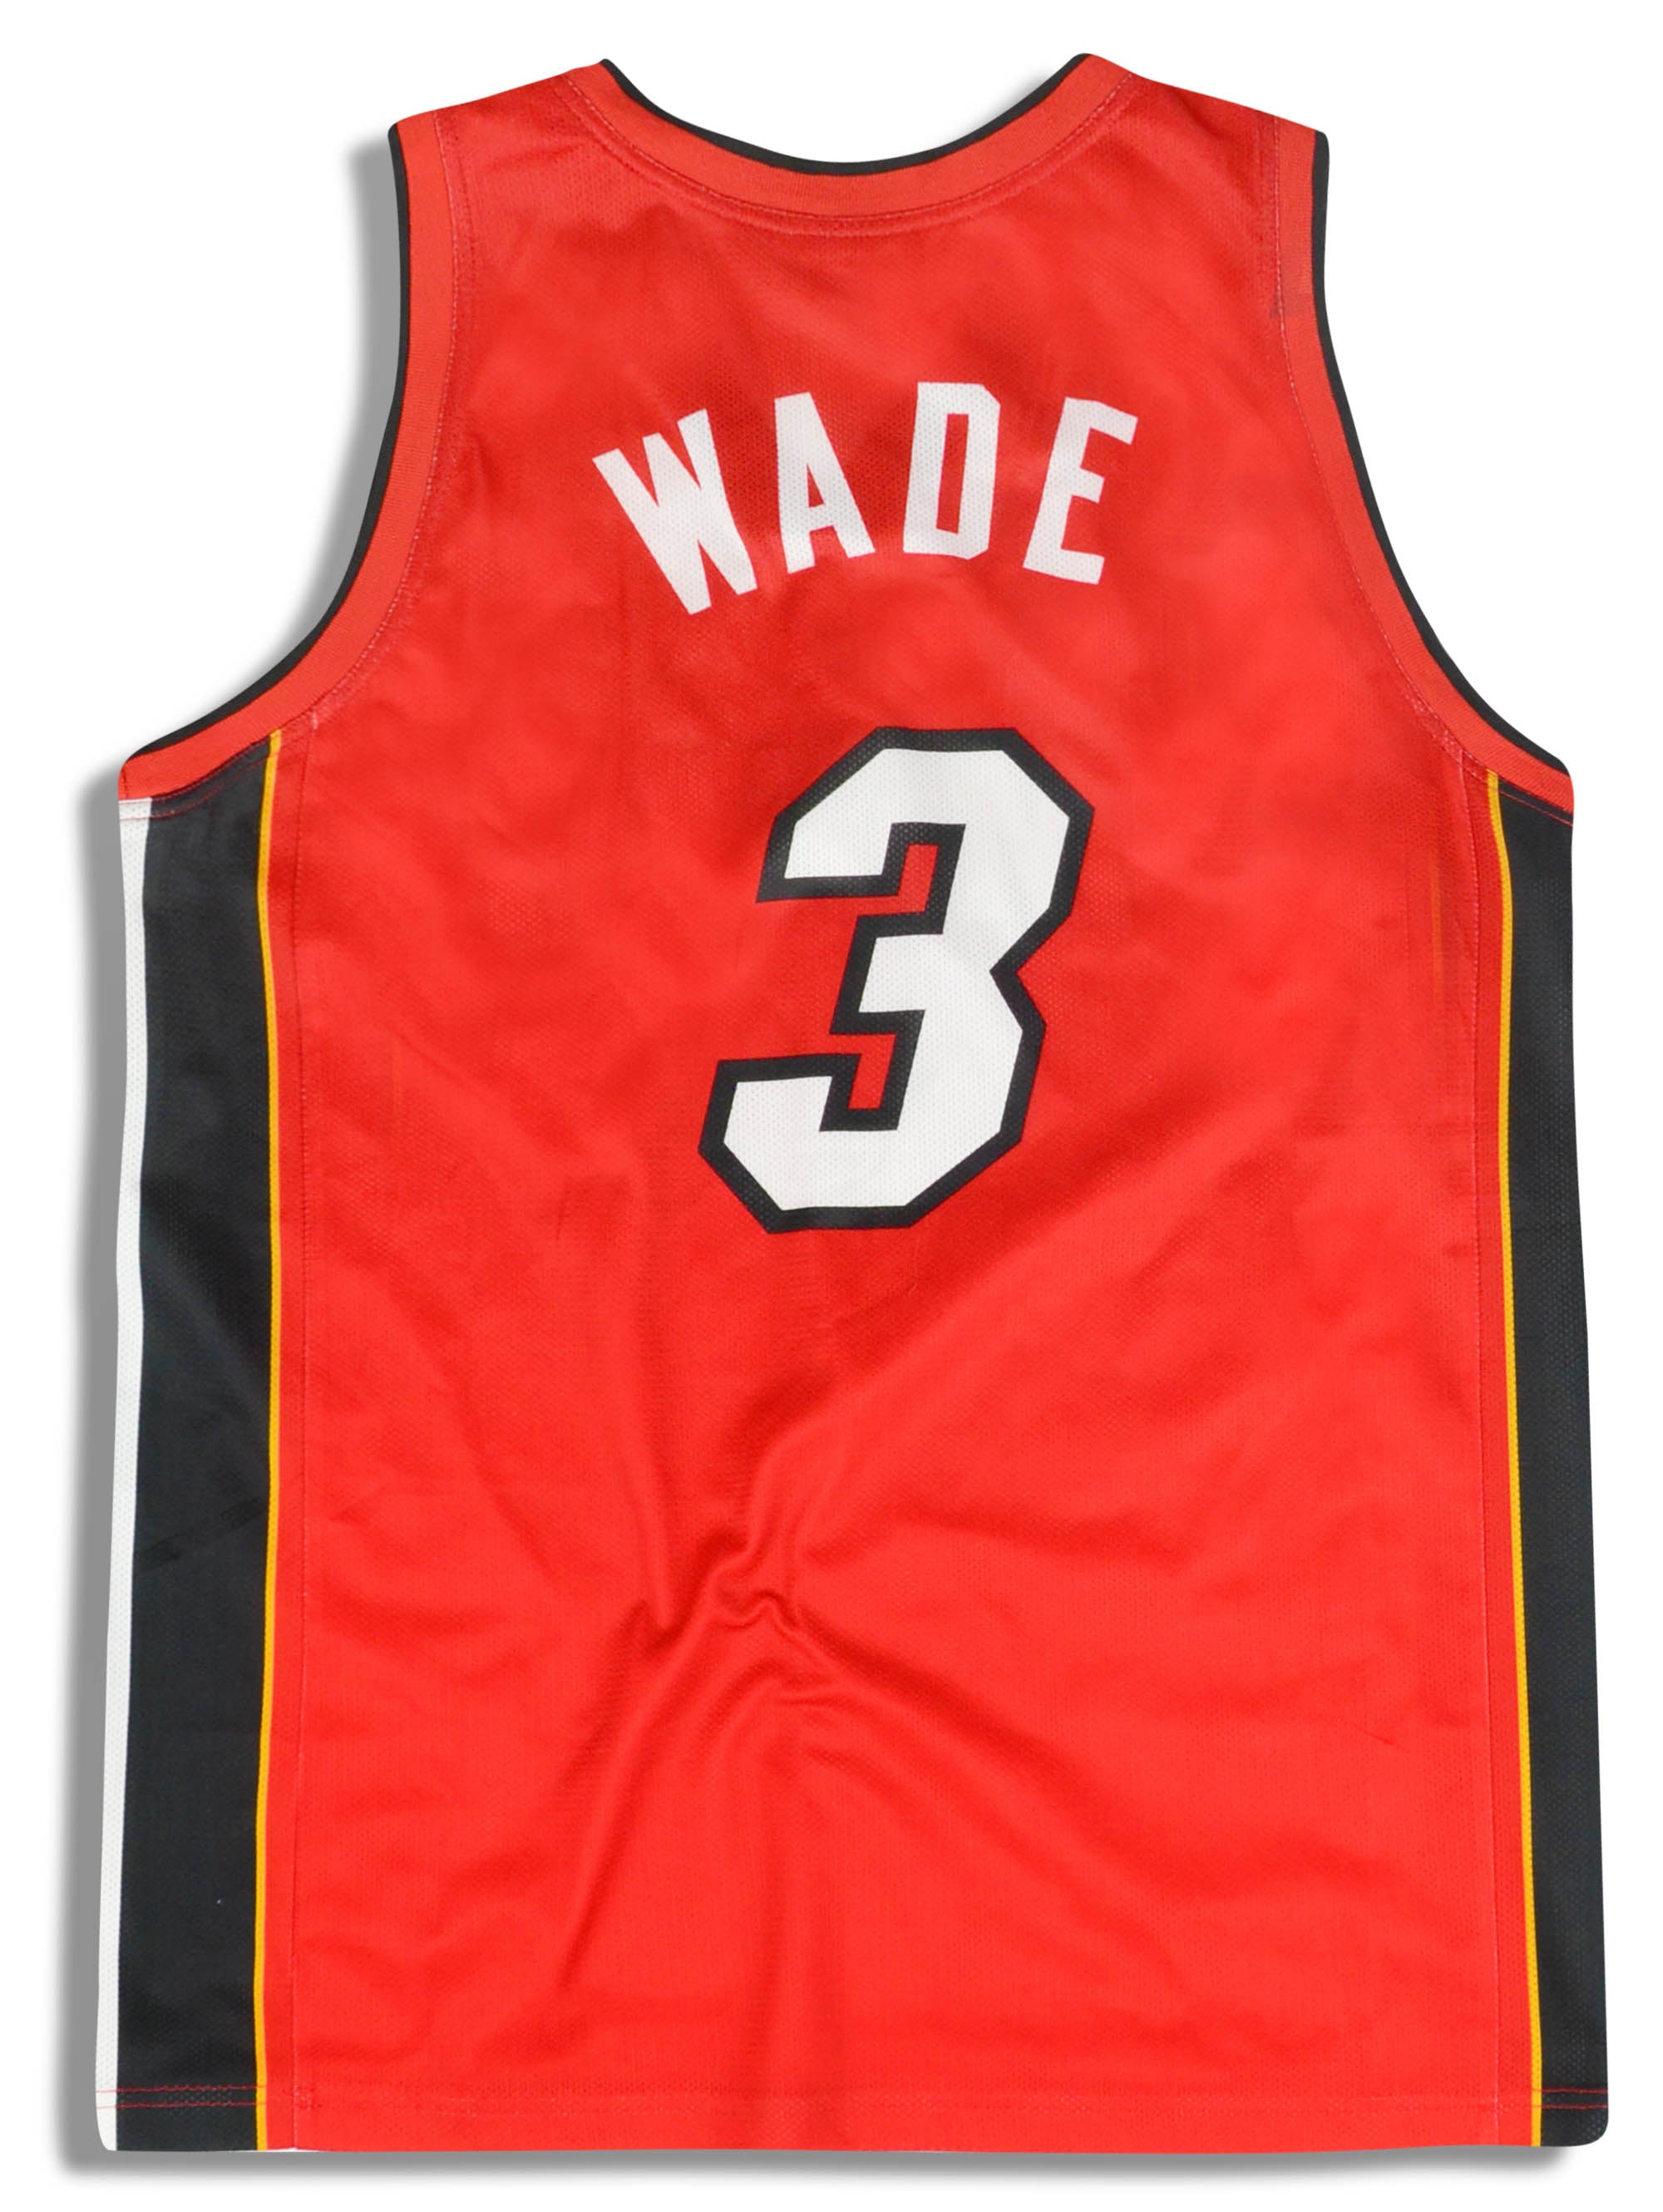 Dwyane Wade Jerseys, Dwyane Wade Shirts, Basketball Apparel, Dwyane Wade  Gear